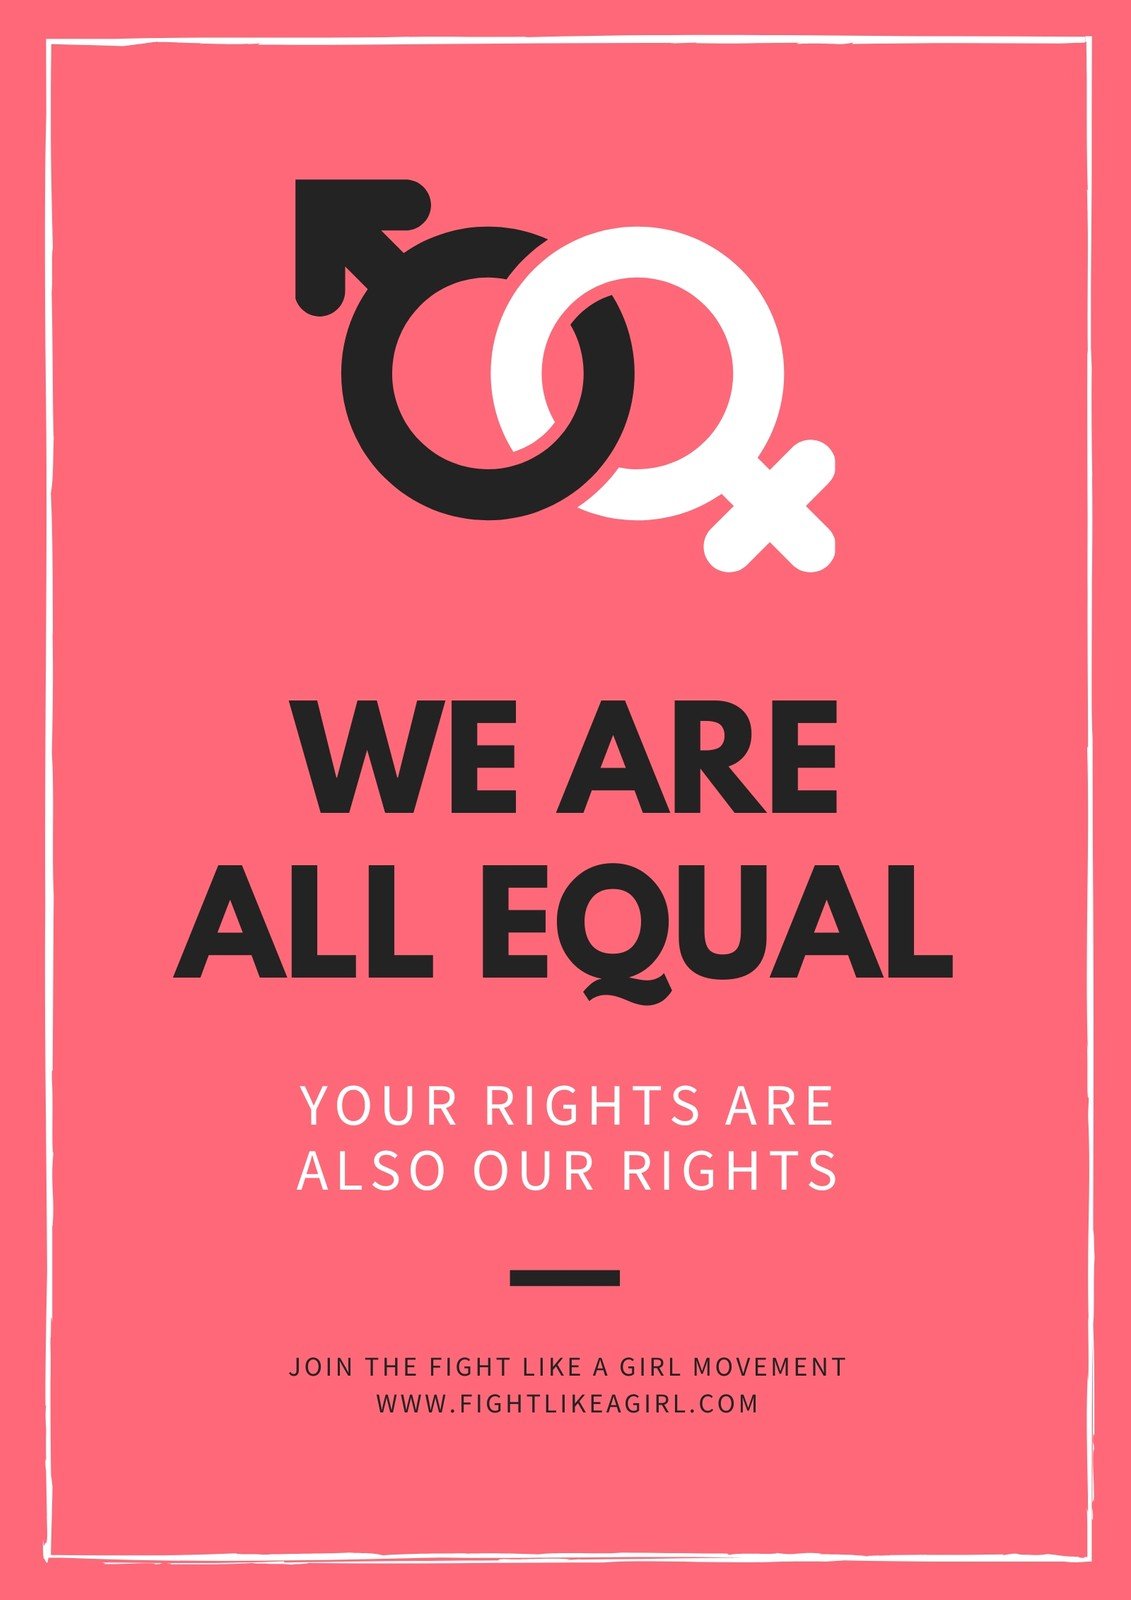 slogan on equality